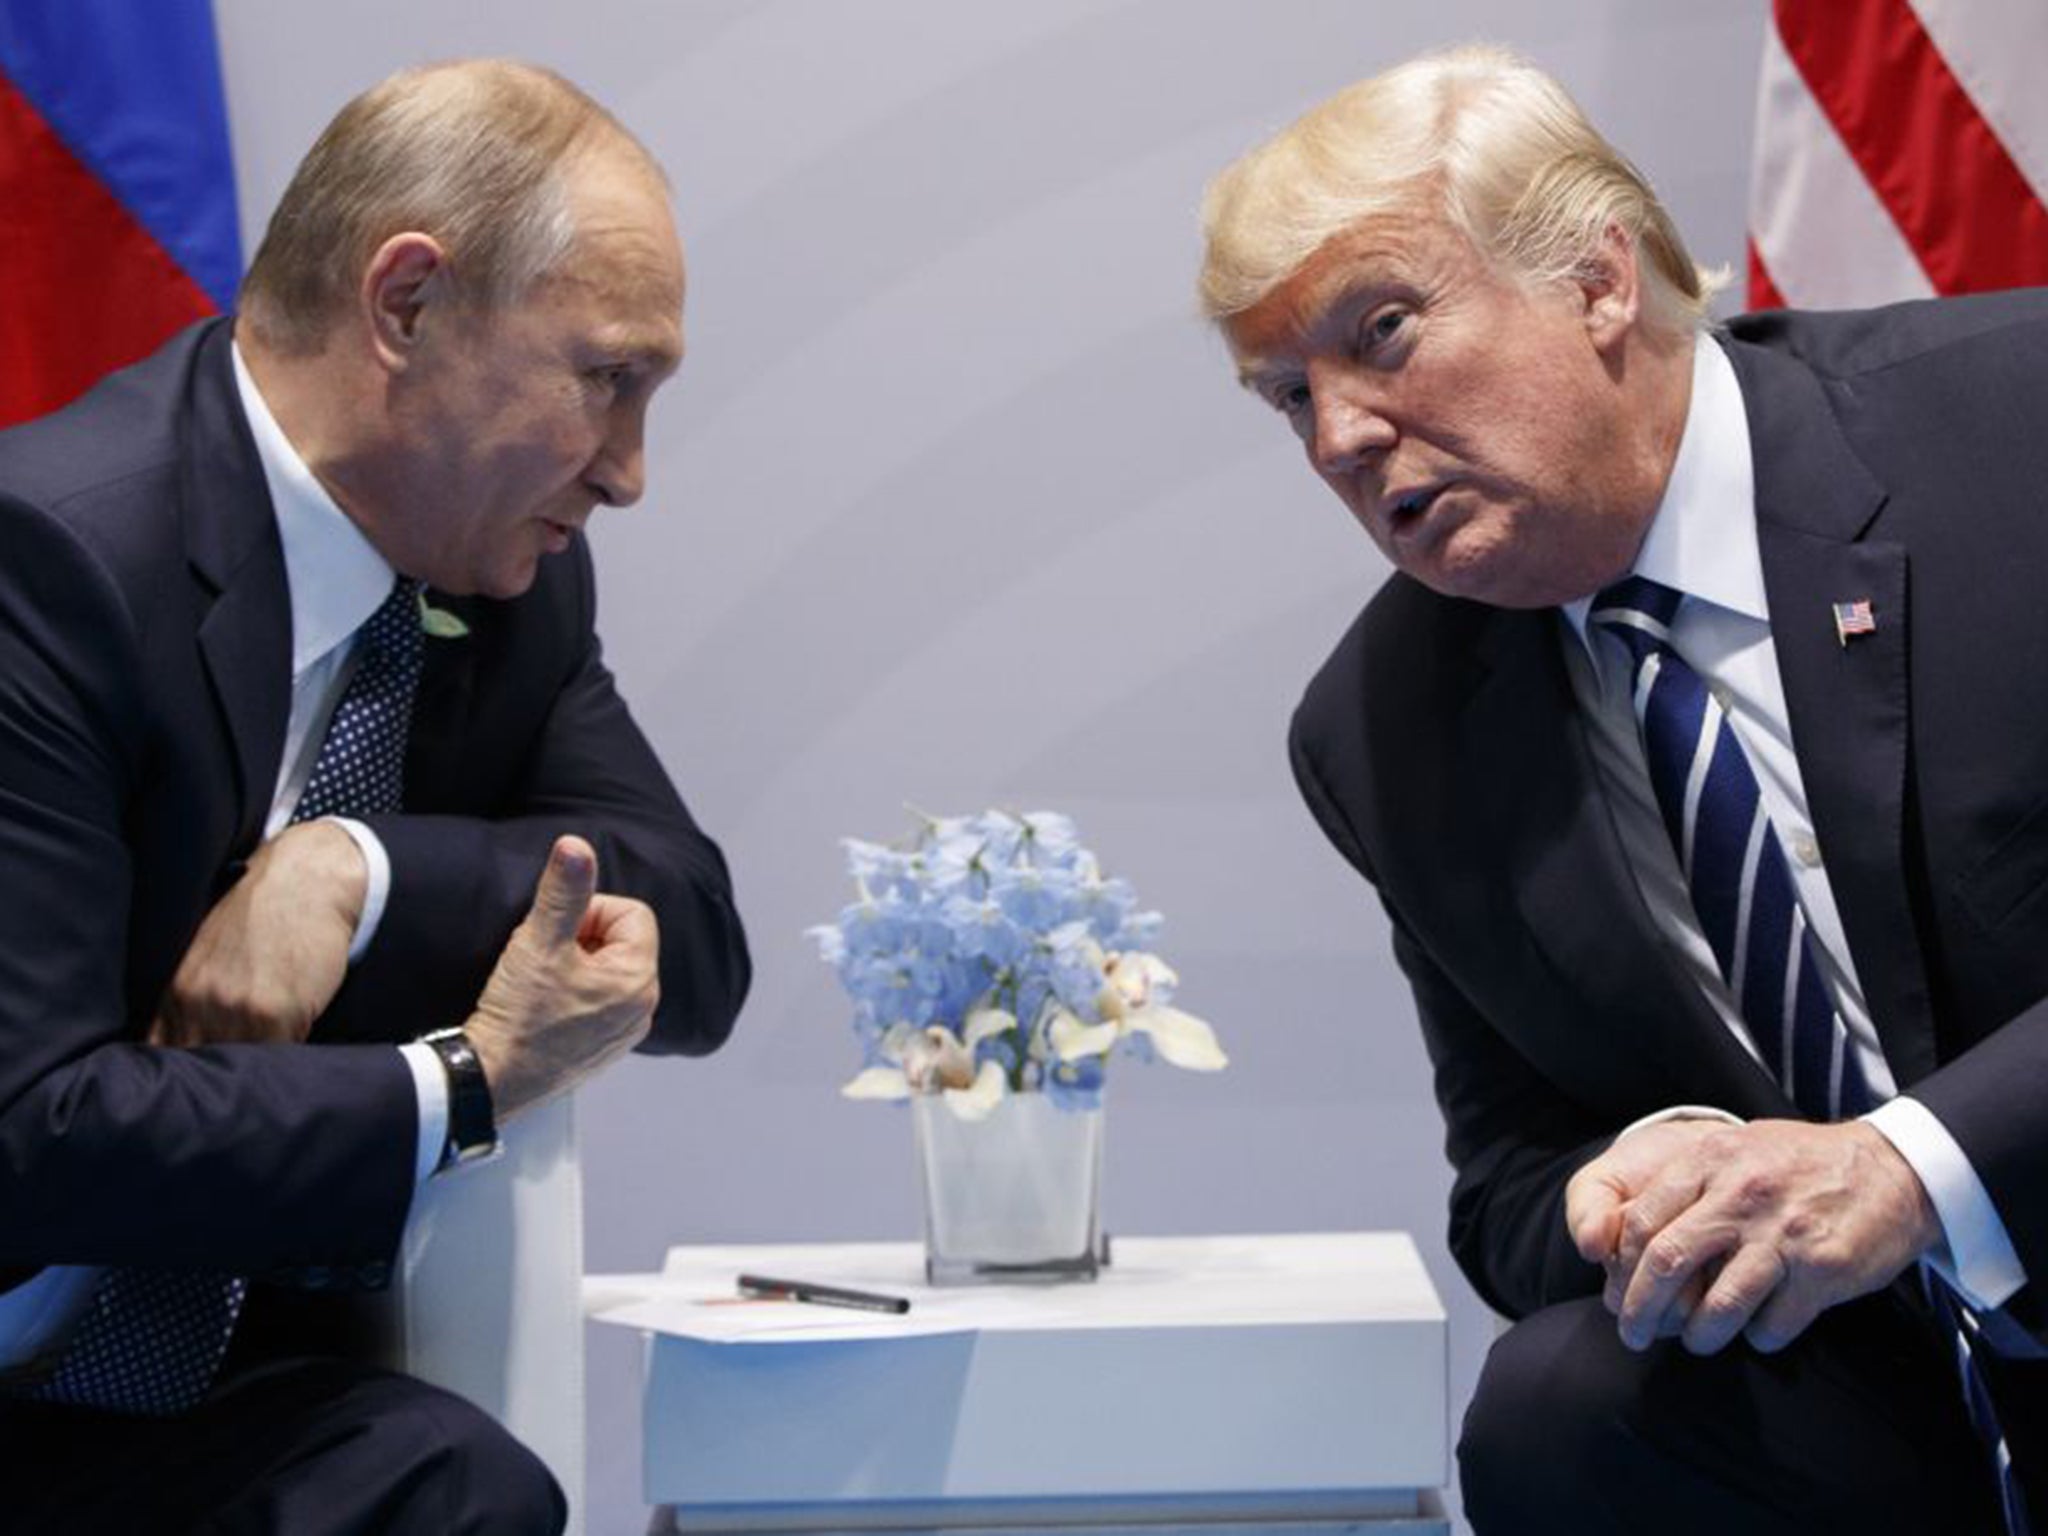 The President with Vladimir Putin at the G20 Summit in Hamburg